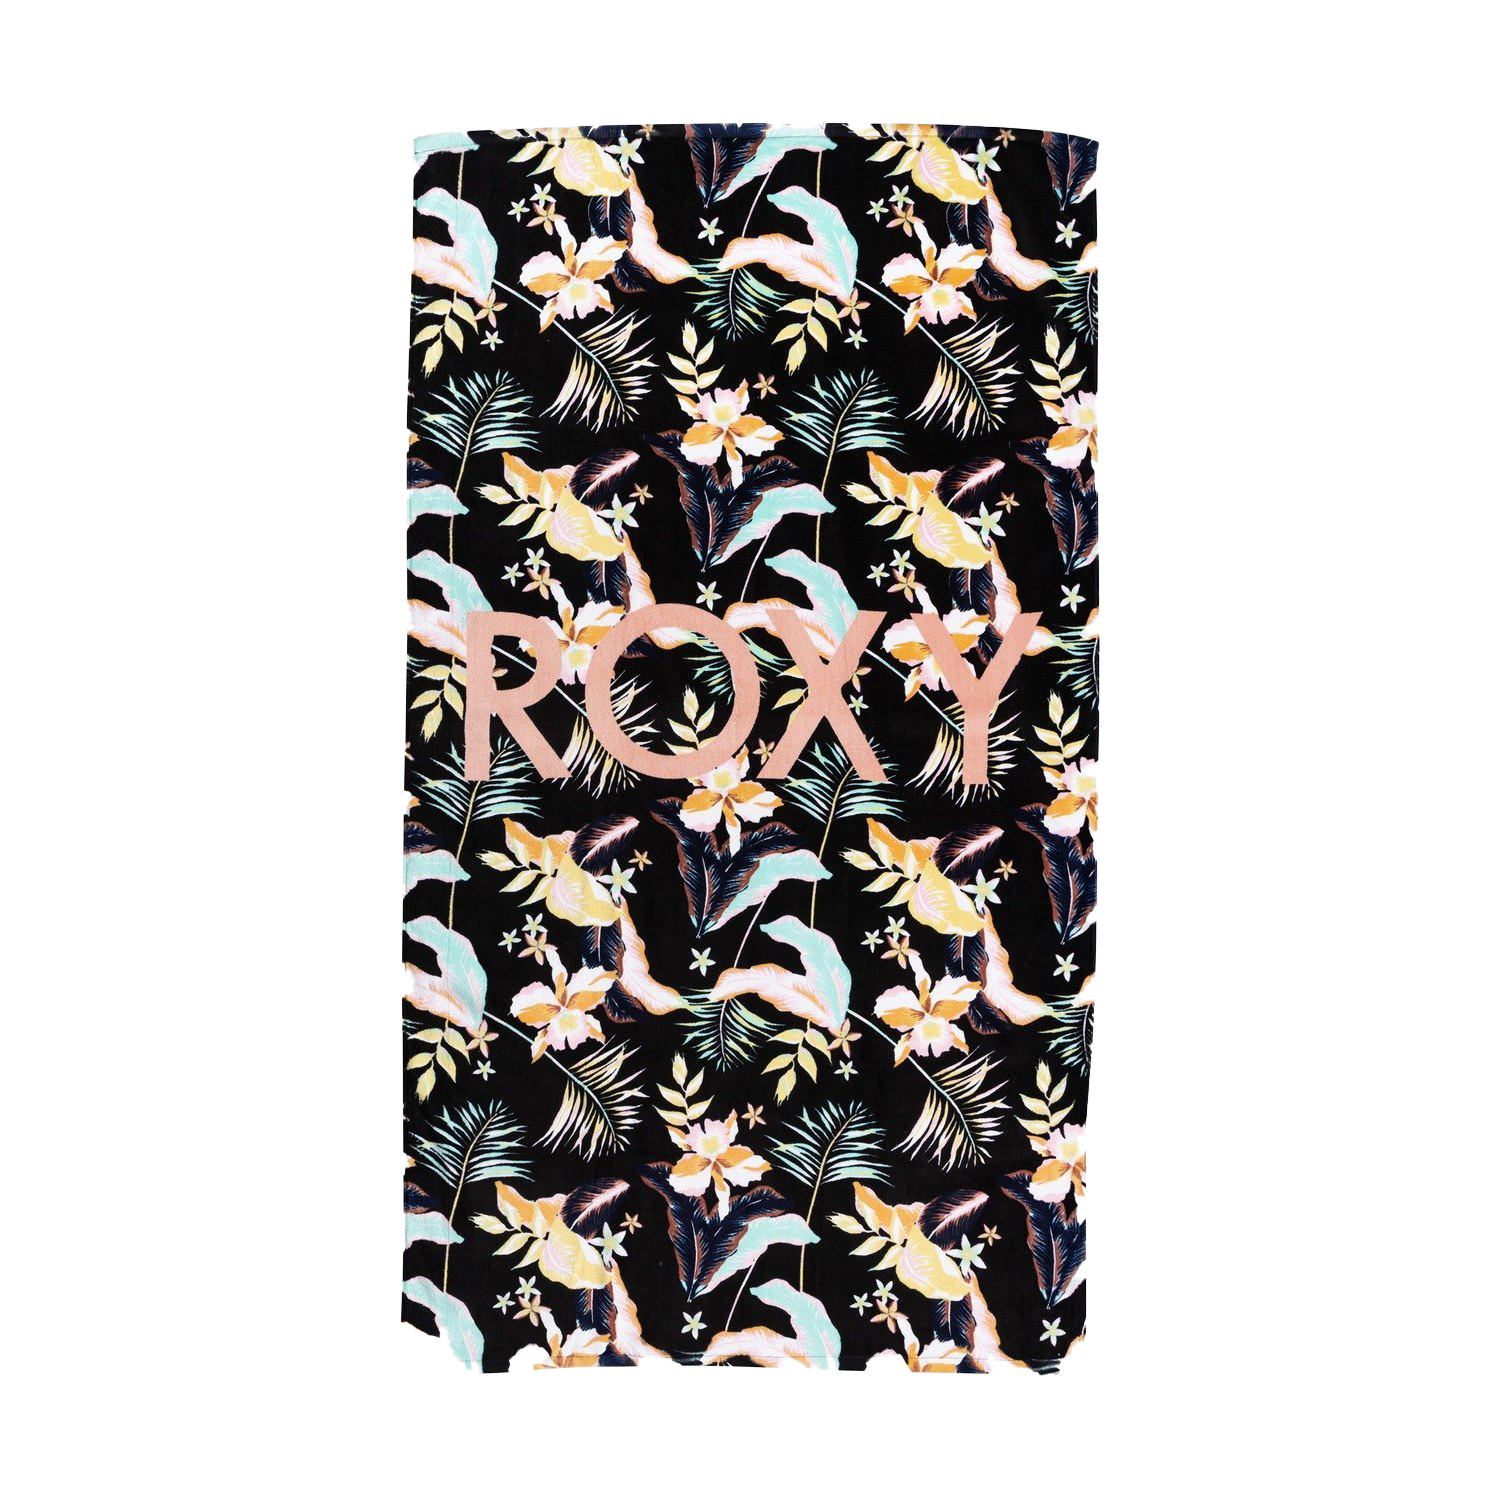 Roxy Sdeach Classics Mod Moldi Kadın Havlu - MULTİ - 1